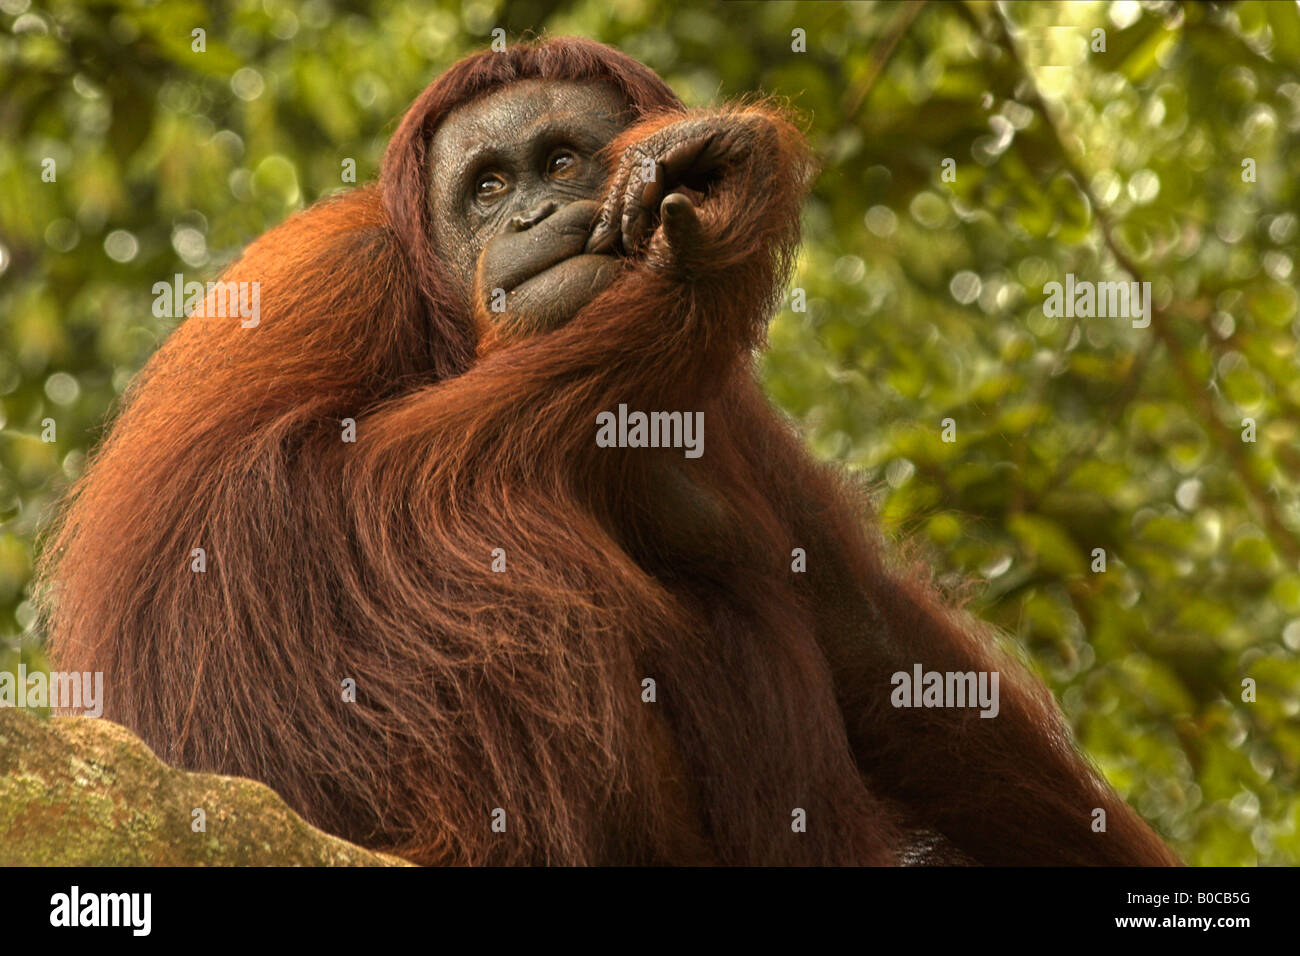 A Very Worried Looking OrangUtan Stock Photo